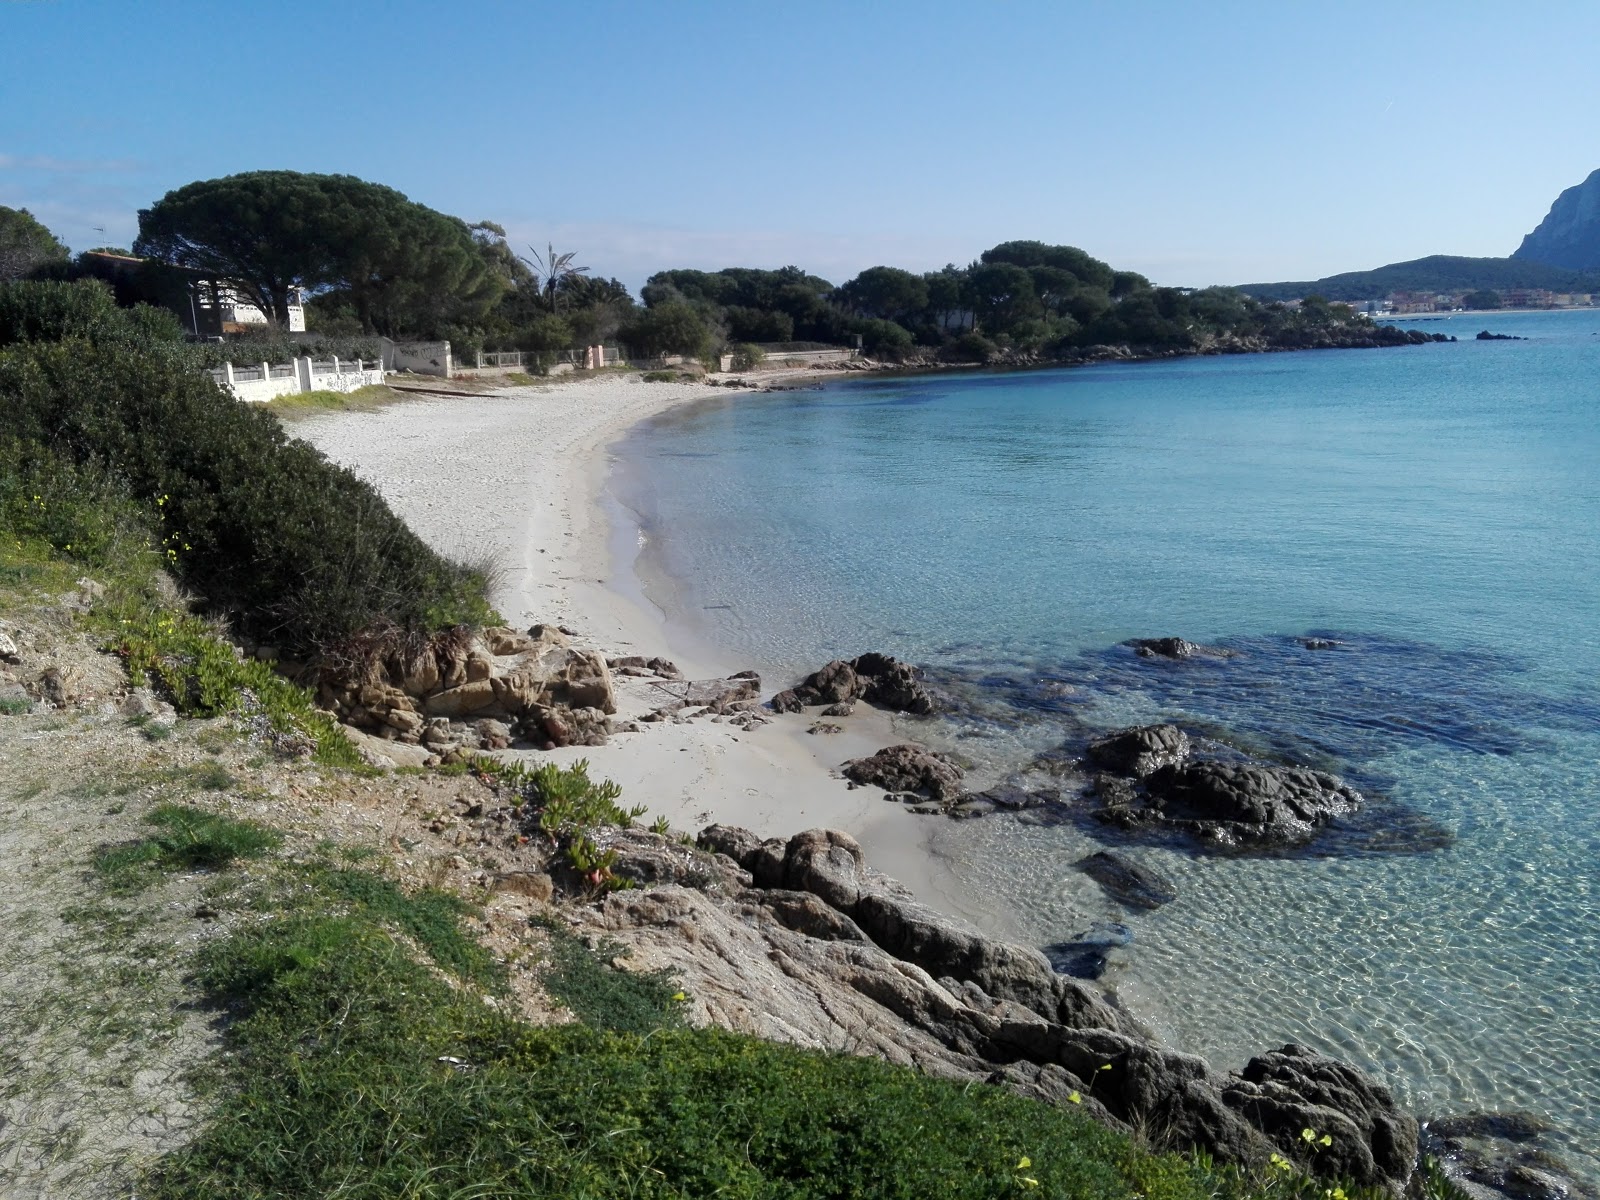 Foto de Quinta Spiaggia - lugar popular entre os apreciadores de relaxamento